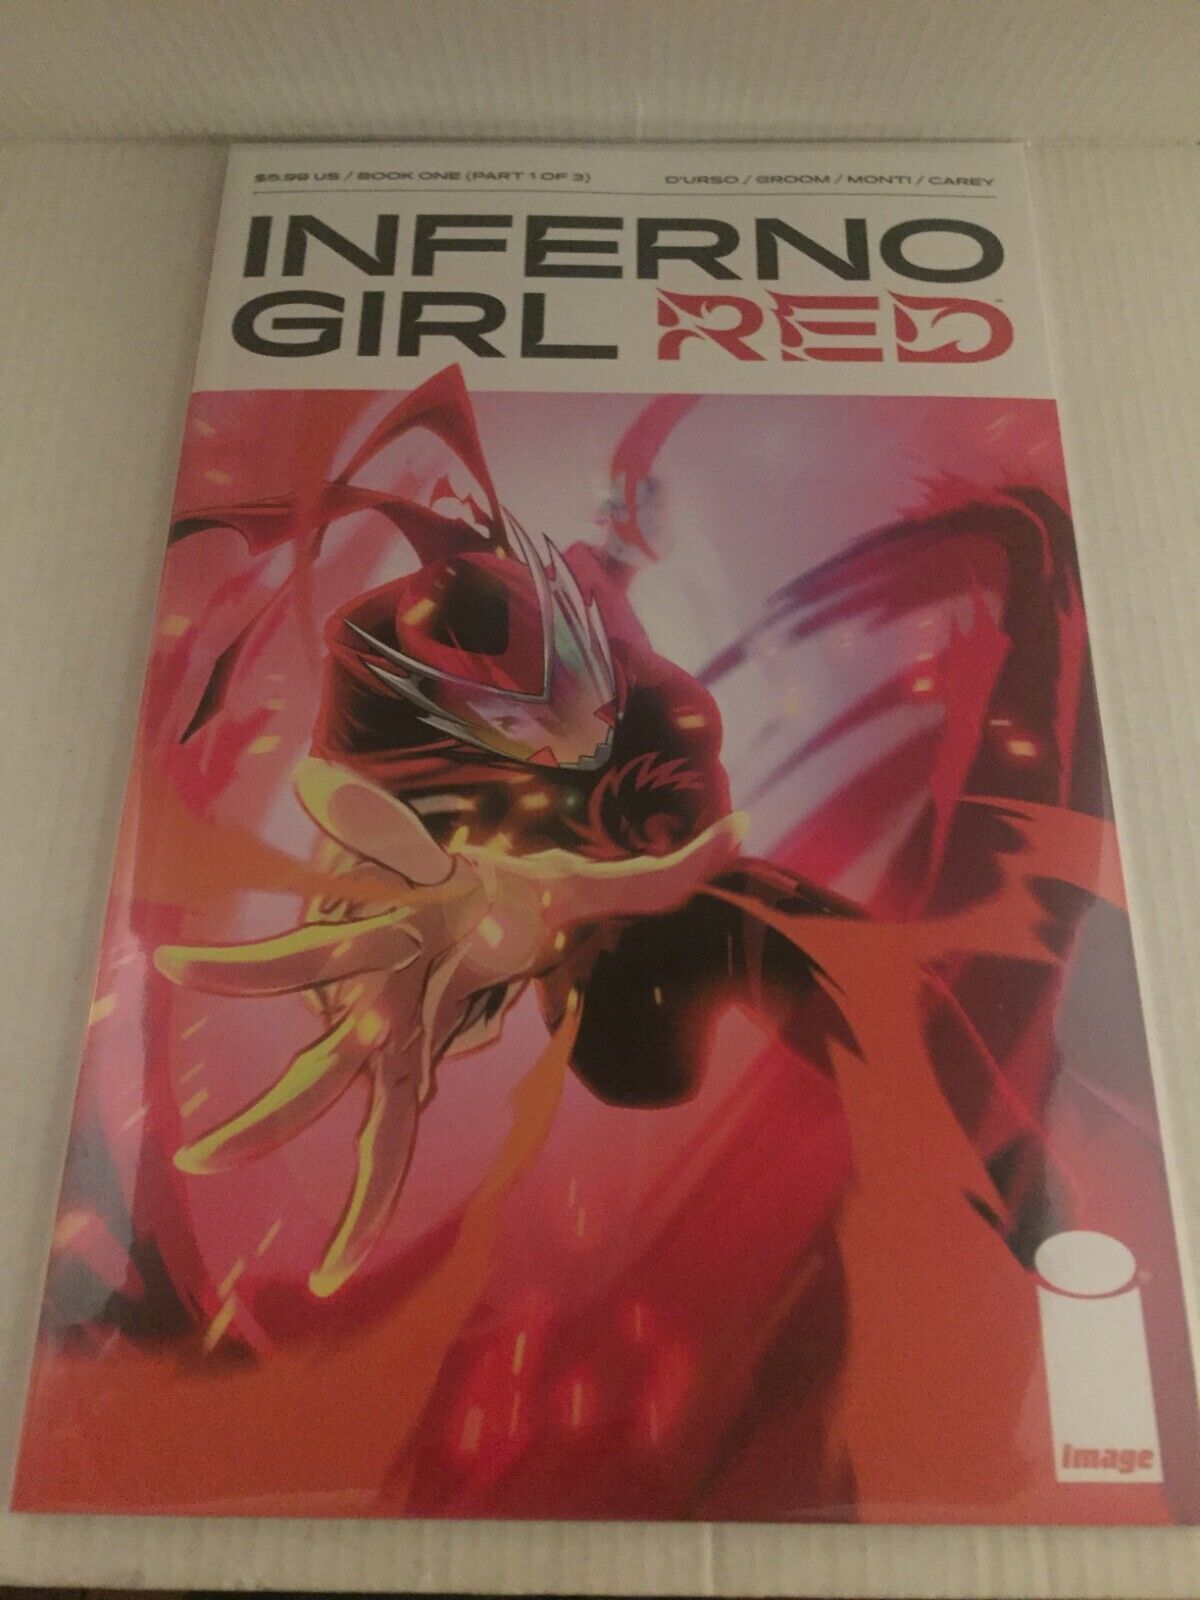 2022 Image Comics Inferno Girl Red Francesco Manna Variant #1